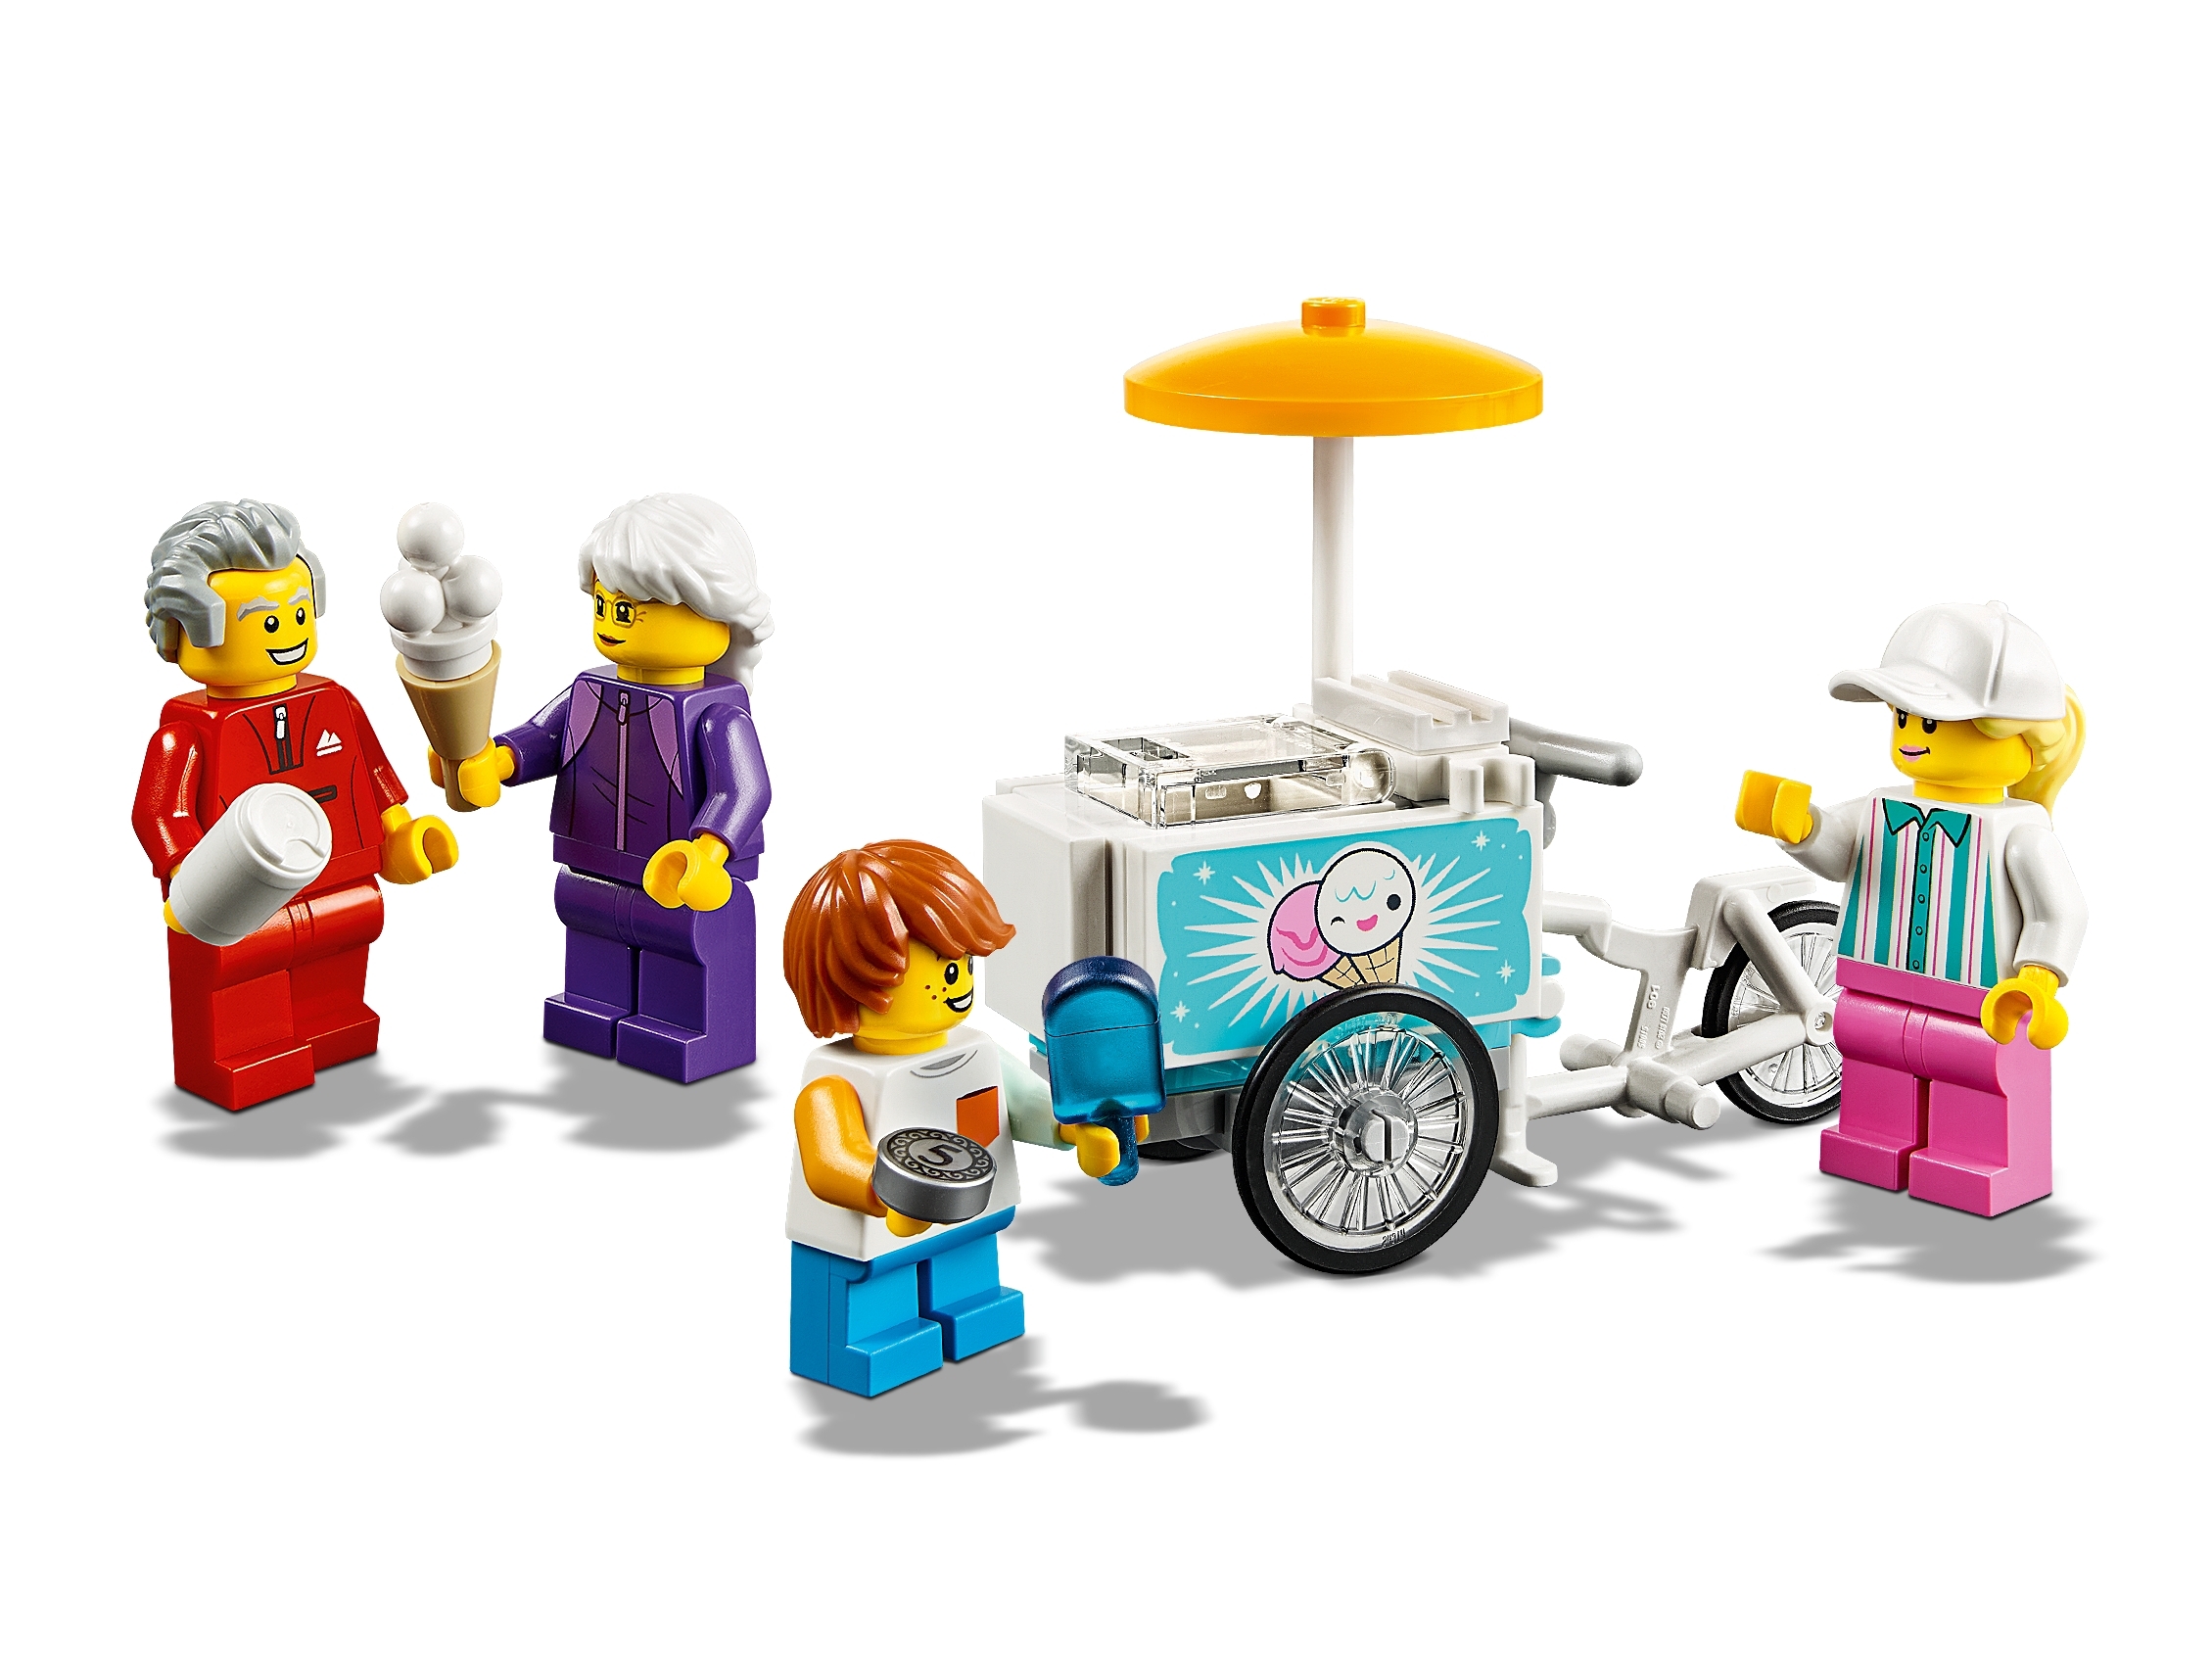 LEGO City: People Pack Fun Fair 60234